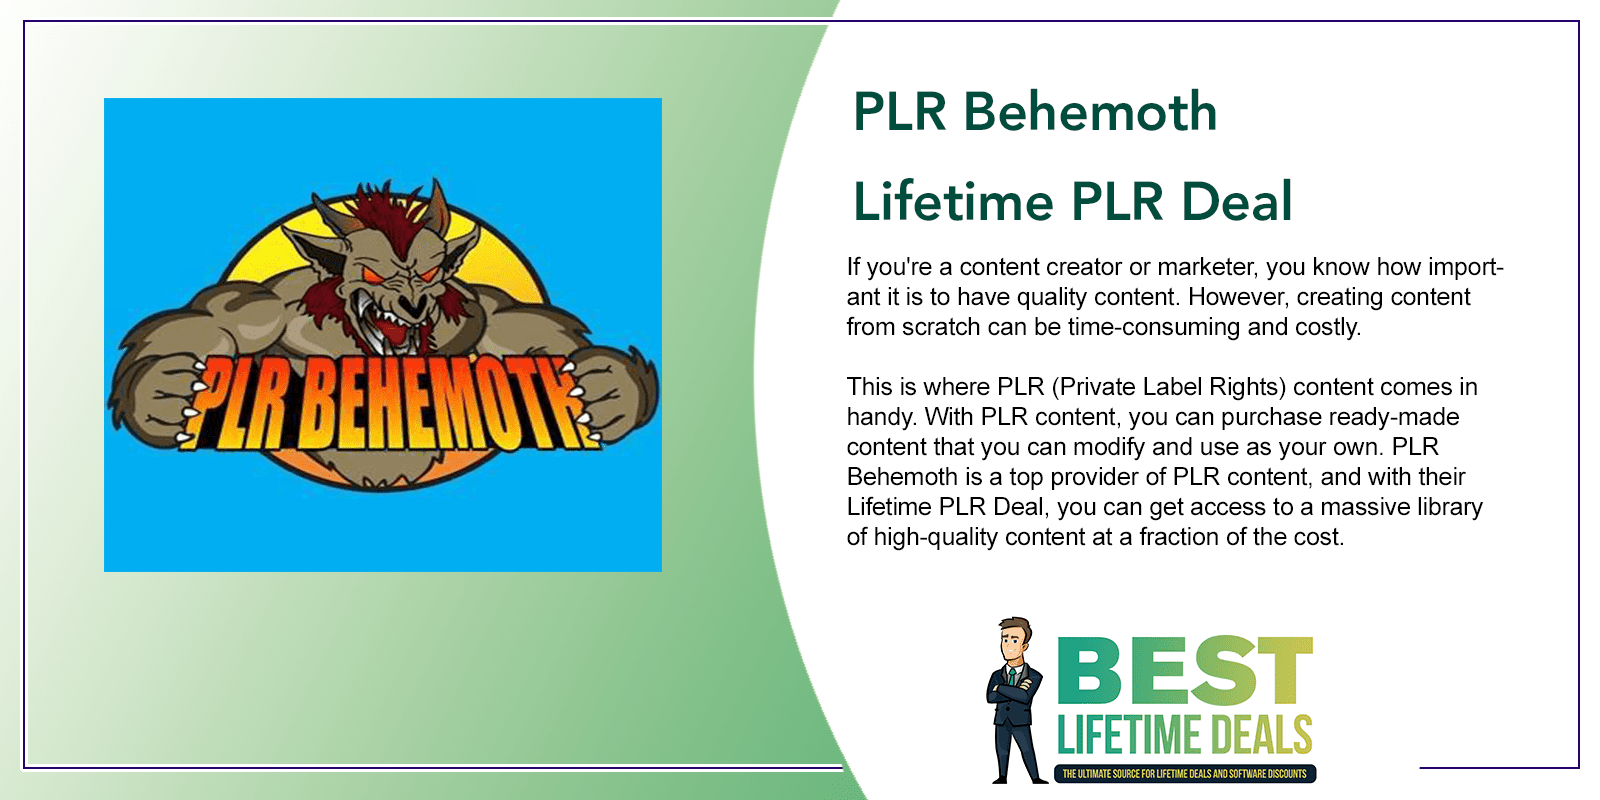 PLR Behemoth Lifetime PLR Deal Featured Image